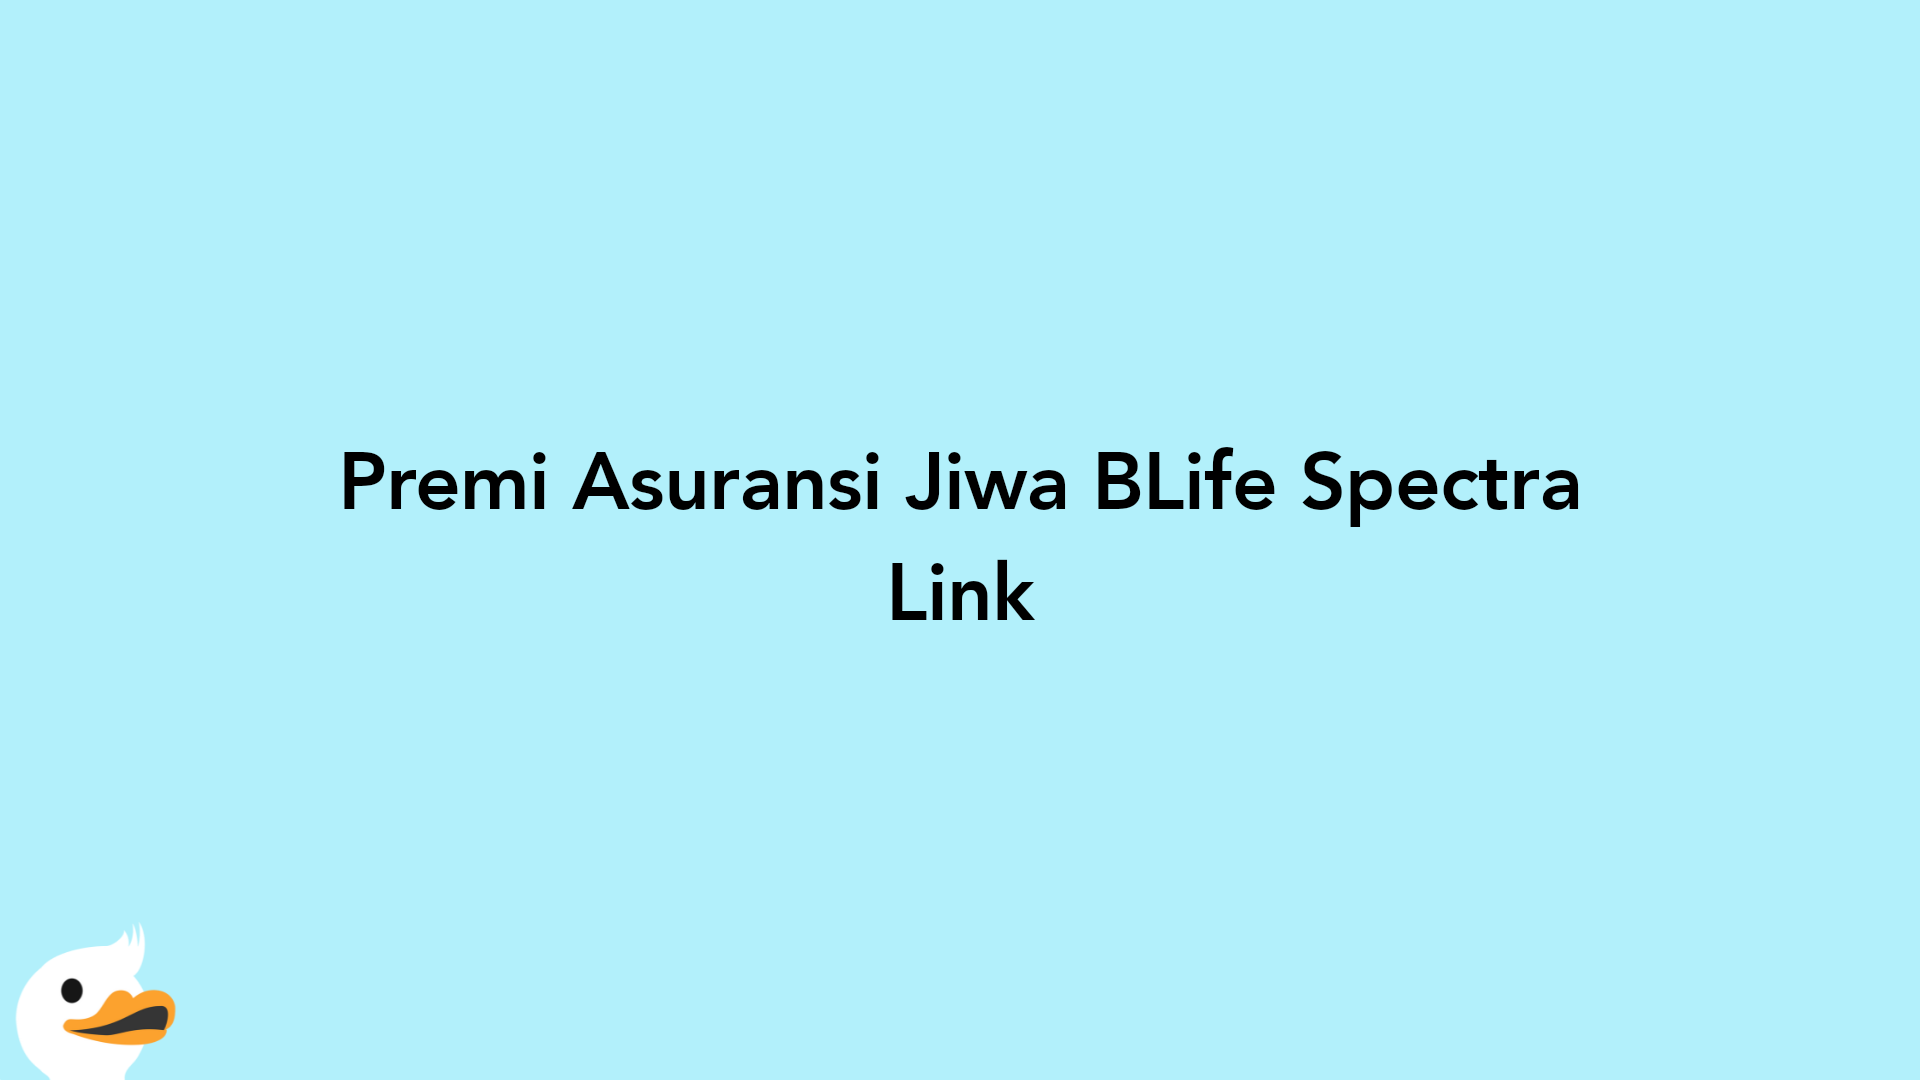 Premi Asuransi Jiwa BLife Spectra Link